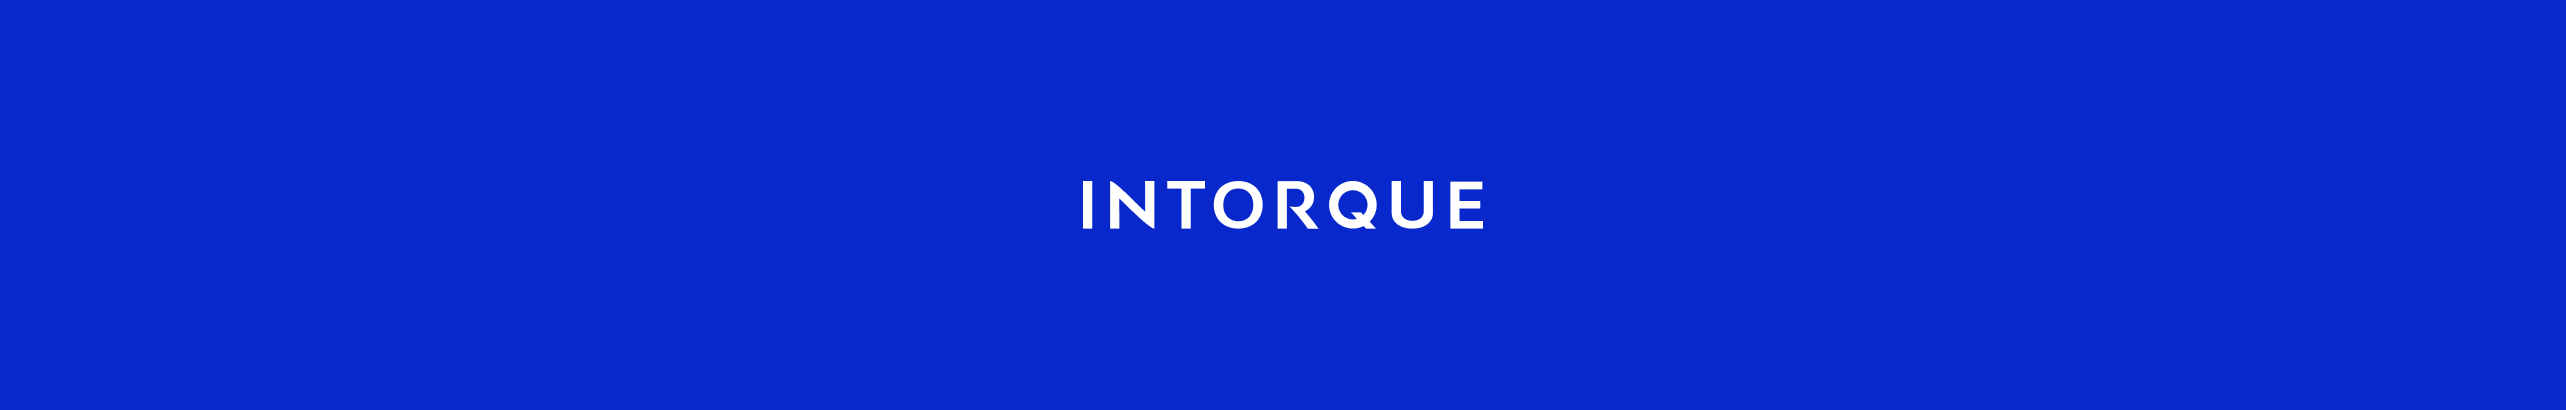 intorque .'s profile banner